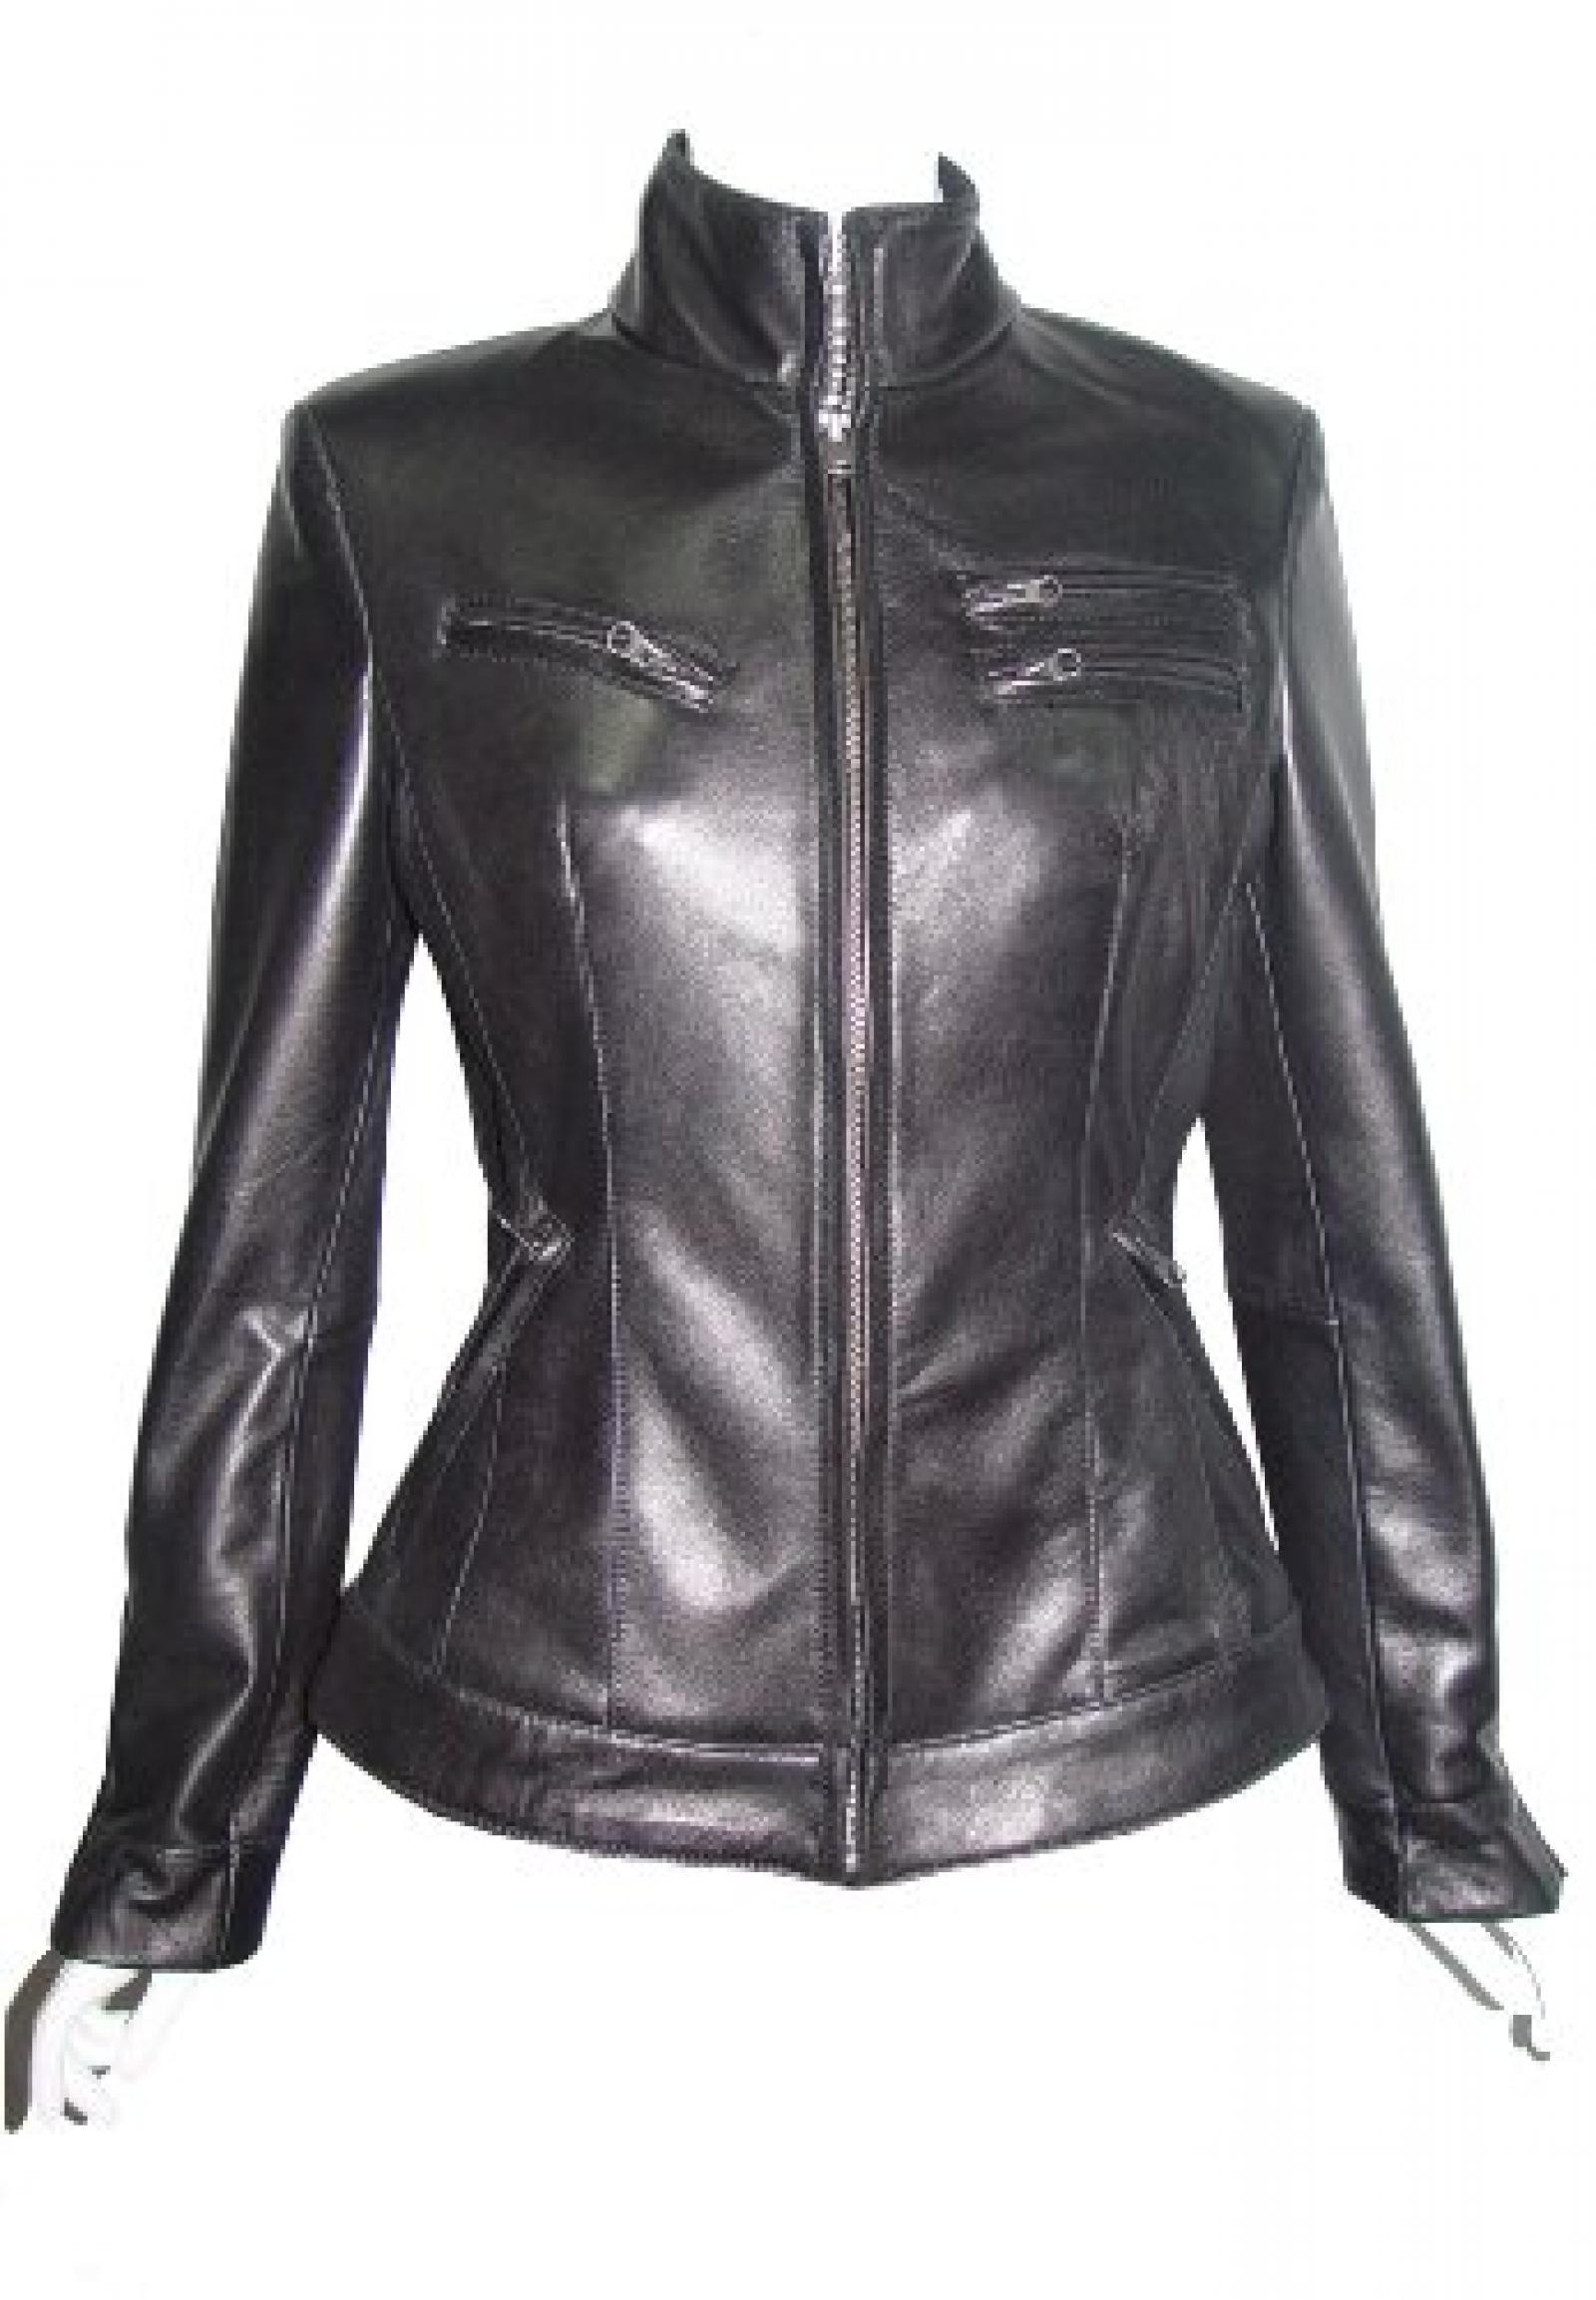 Nettailor Women 4199 Soft Leather New Casual Biker Jacket Zip Front 